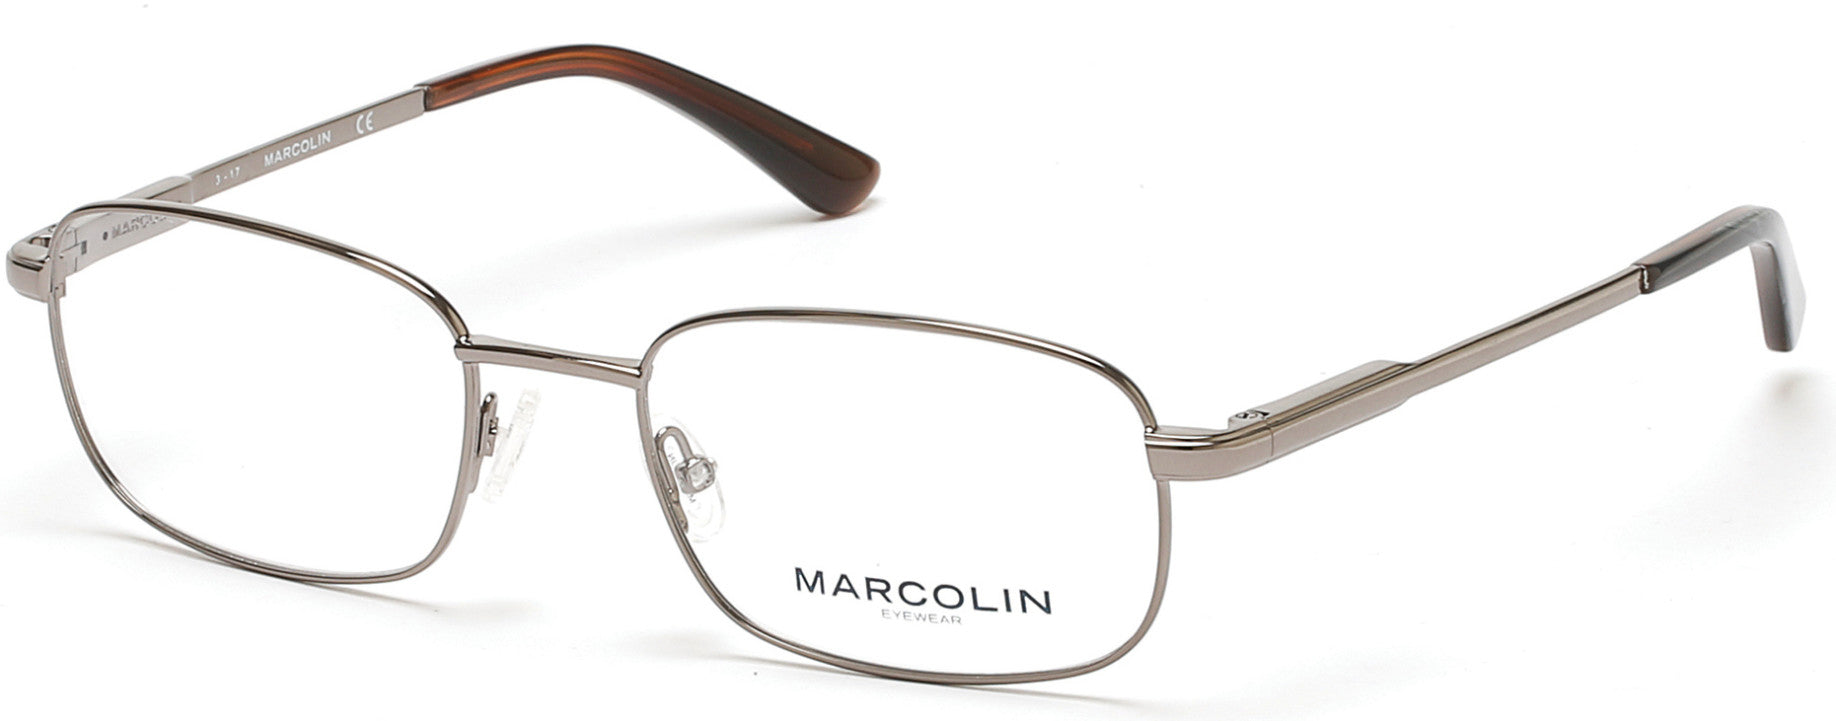 Marcolin MA3003 Eyeglasses 008-008 - Shiny Gunmetal